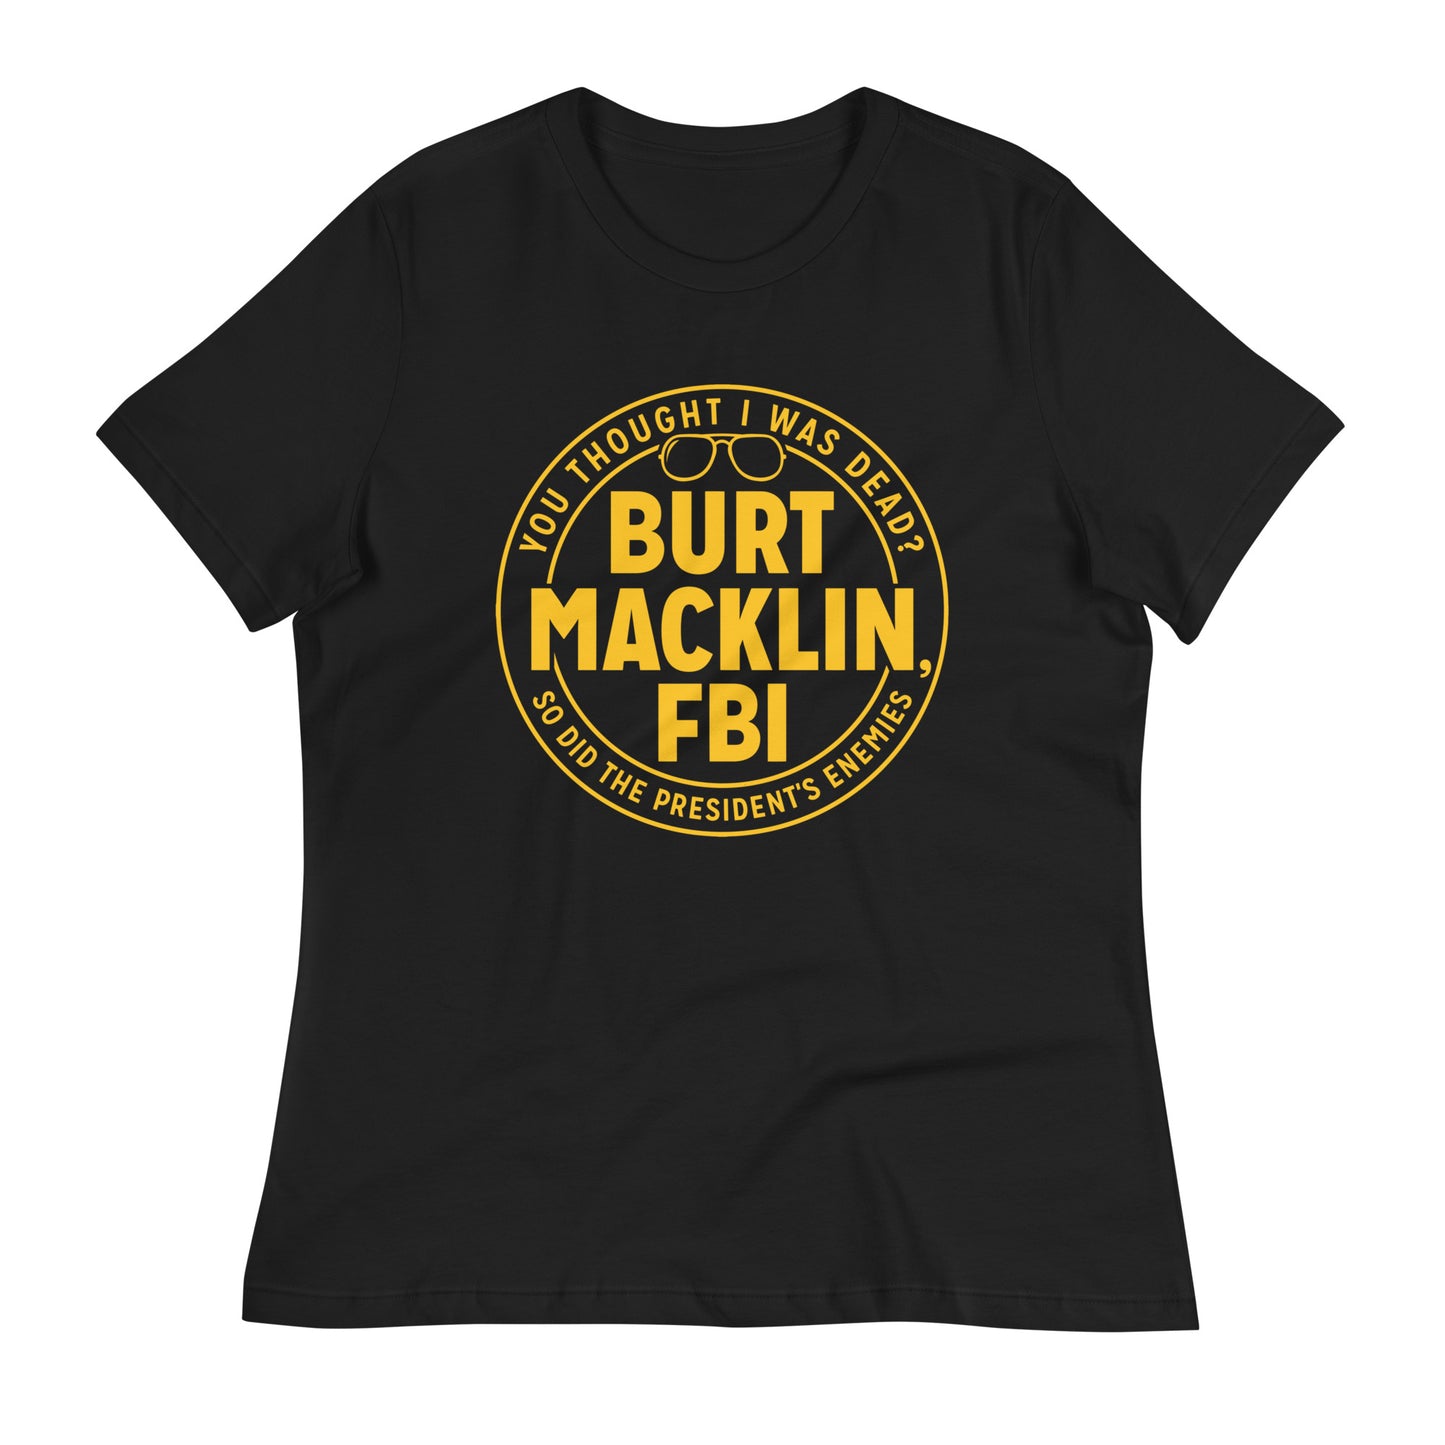 Burt Macklin, FBI Women's Signature Tee